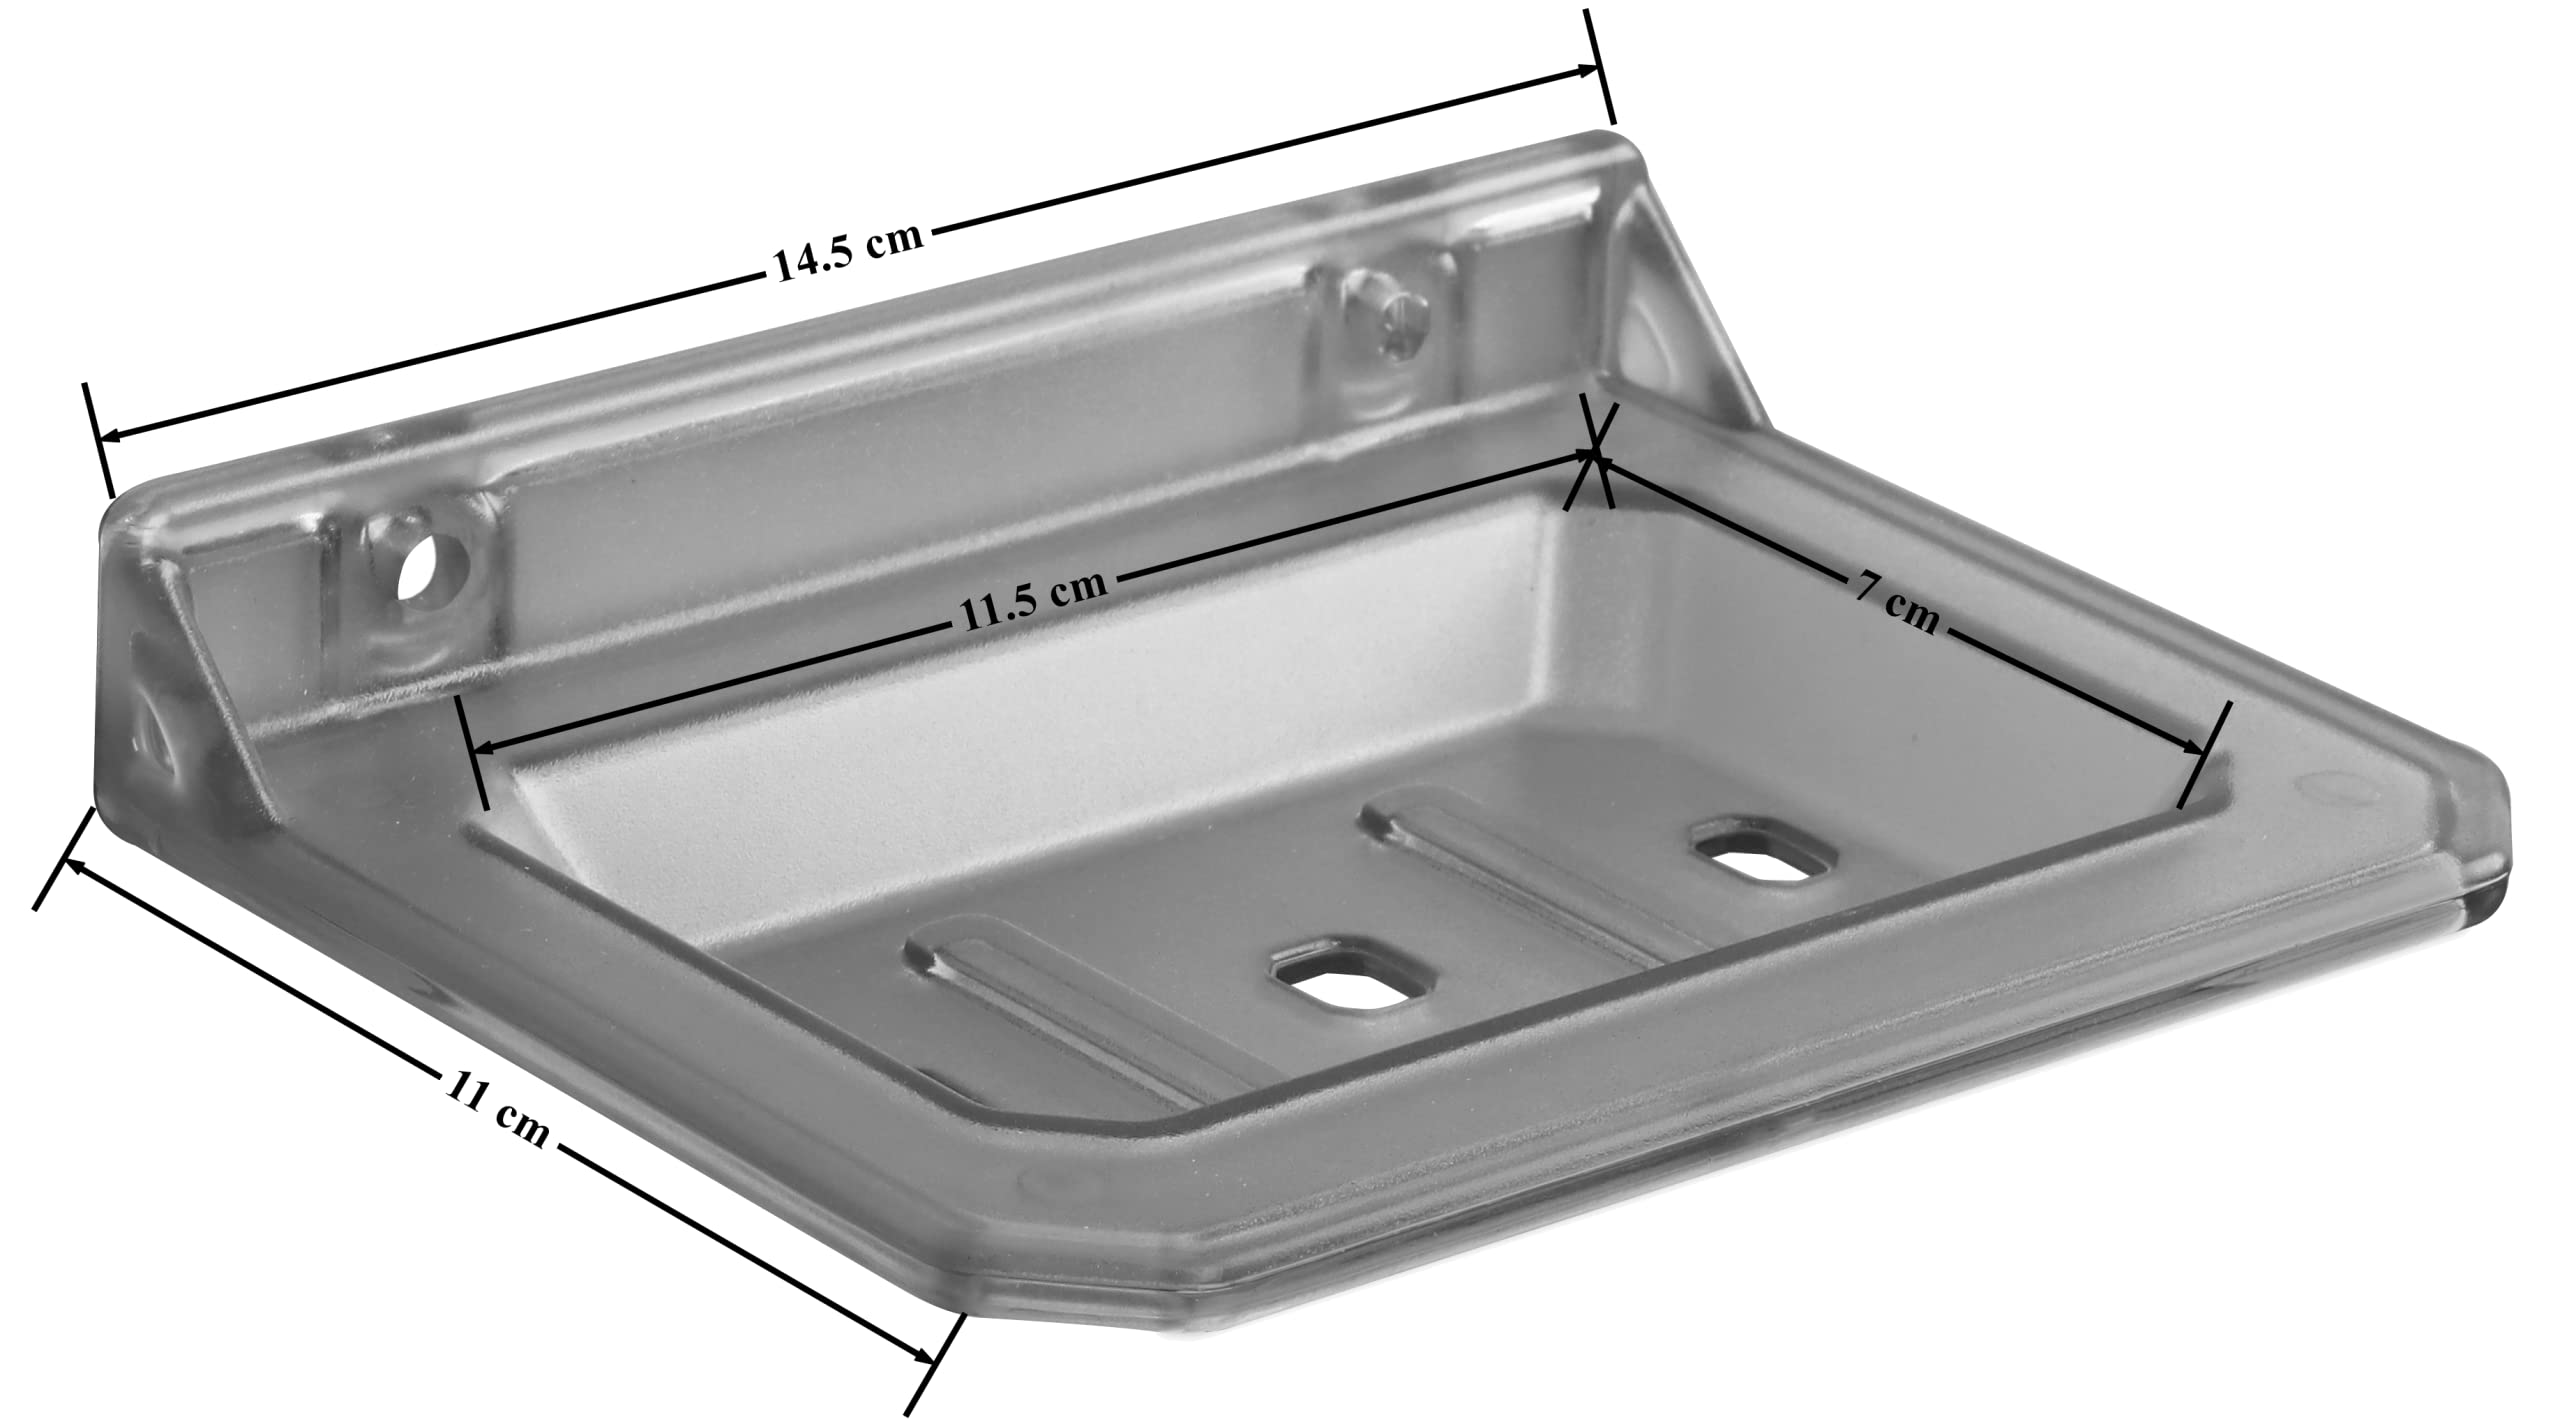 Plantex Unbrackble ABS Plastic Single Soap Dish/Stand/Holder for Bathroom & Kitchen/Bathroom Accessories (Transparent)